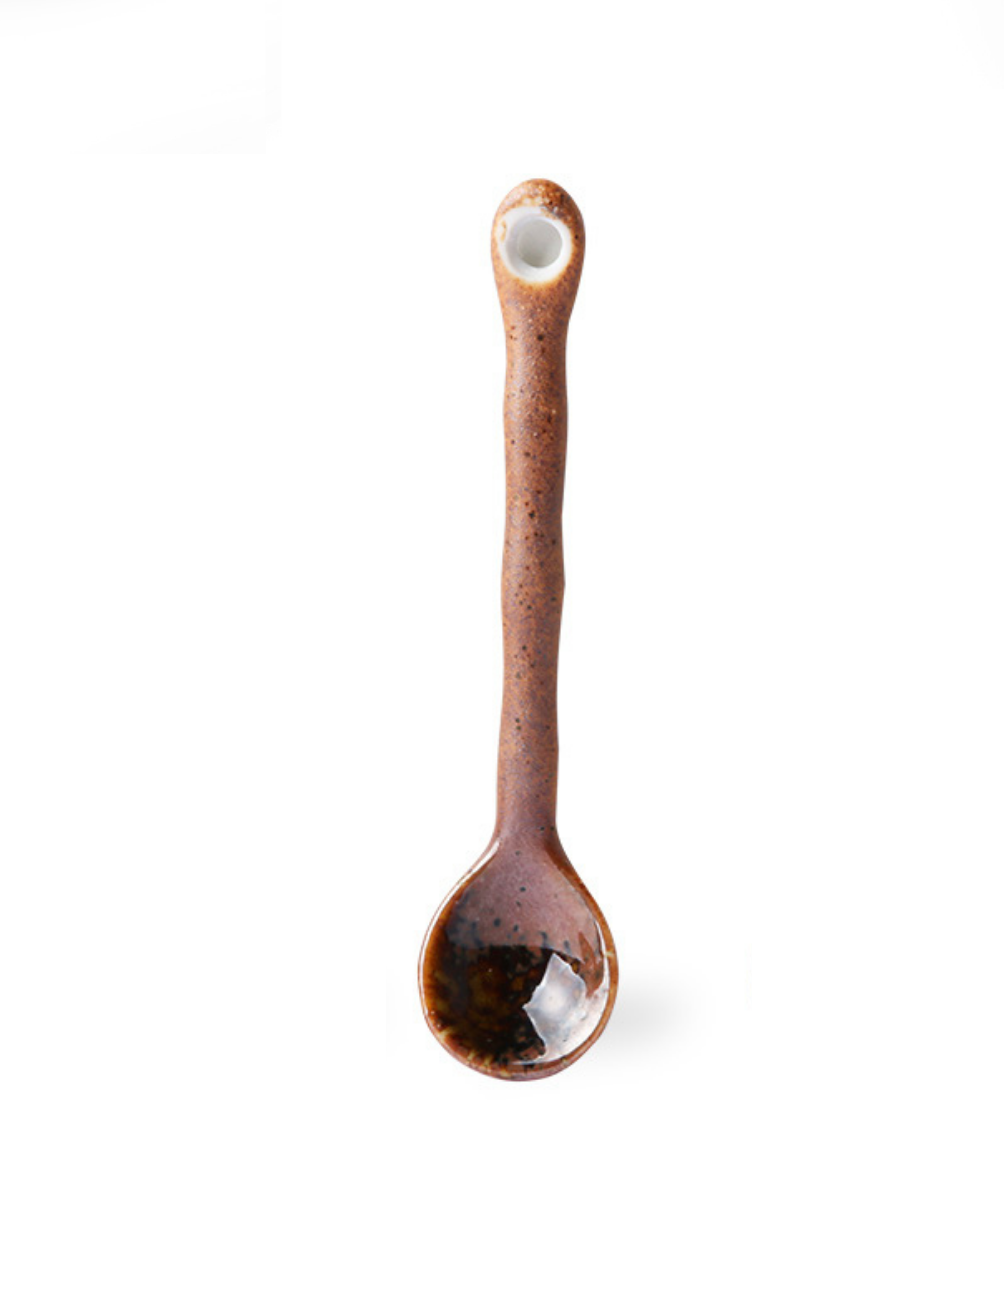 Japanese Ceramic Spoon Rust